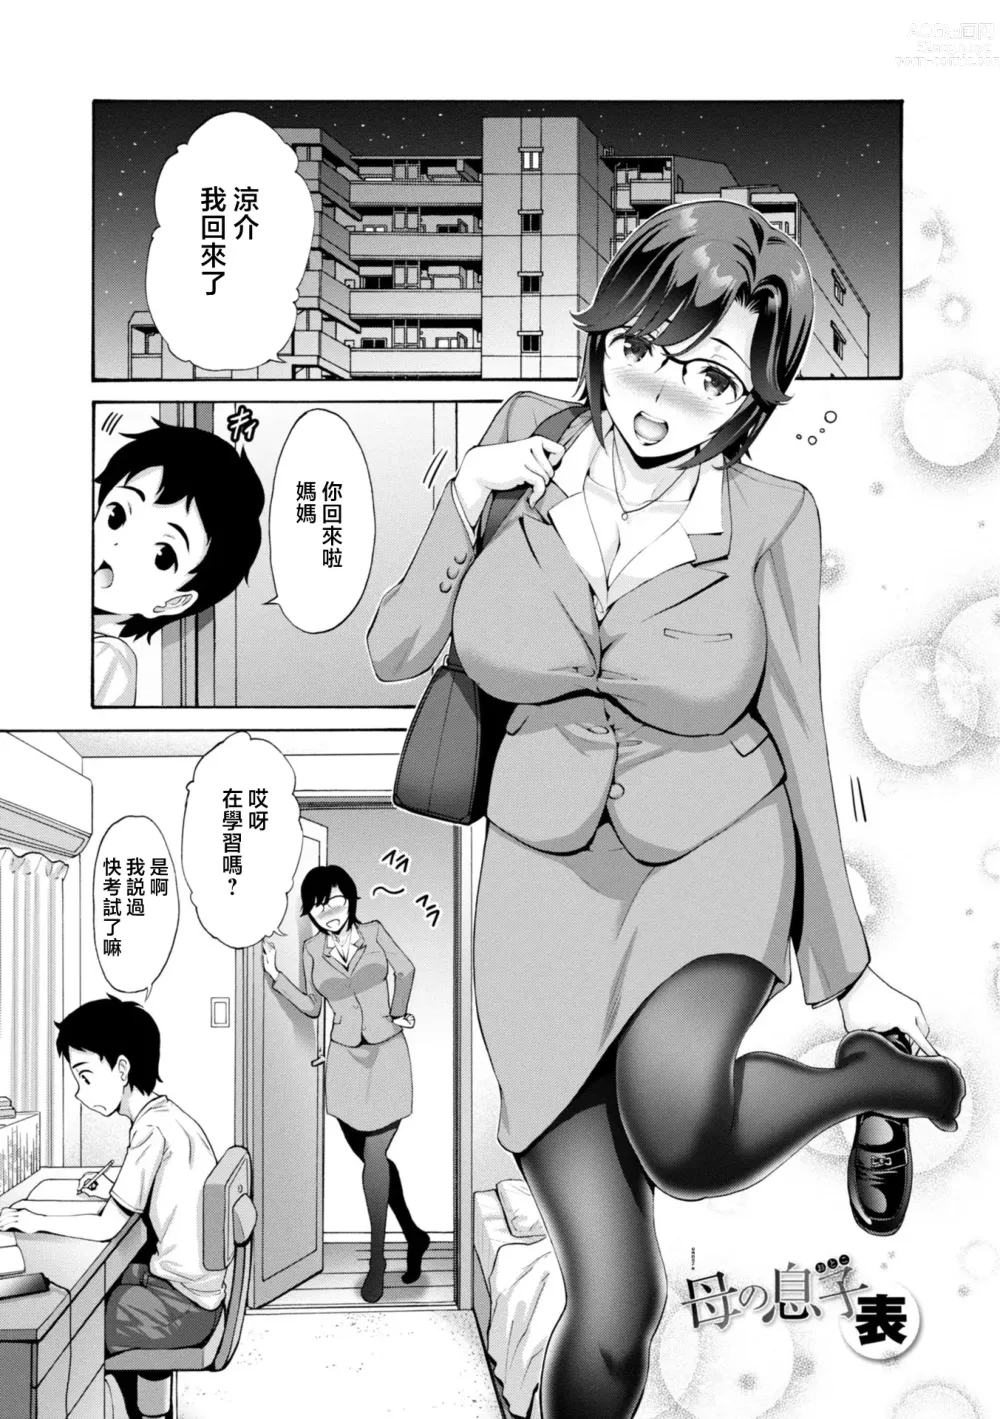 Page 5 of manga Haha wa Musuko no Chinpo ni Koi o Suru - Mother lusts after her sons dick.